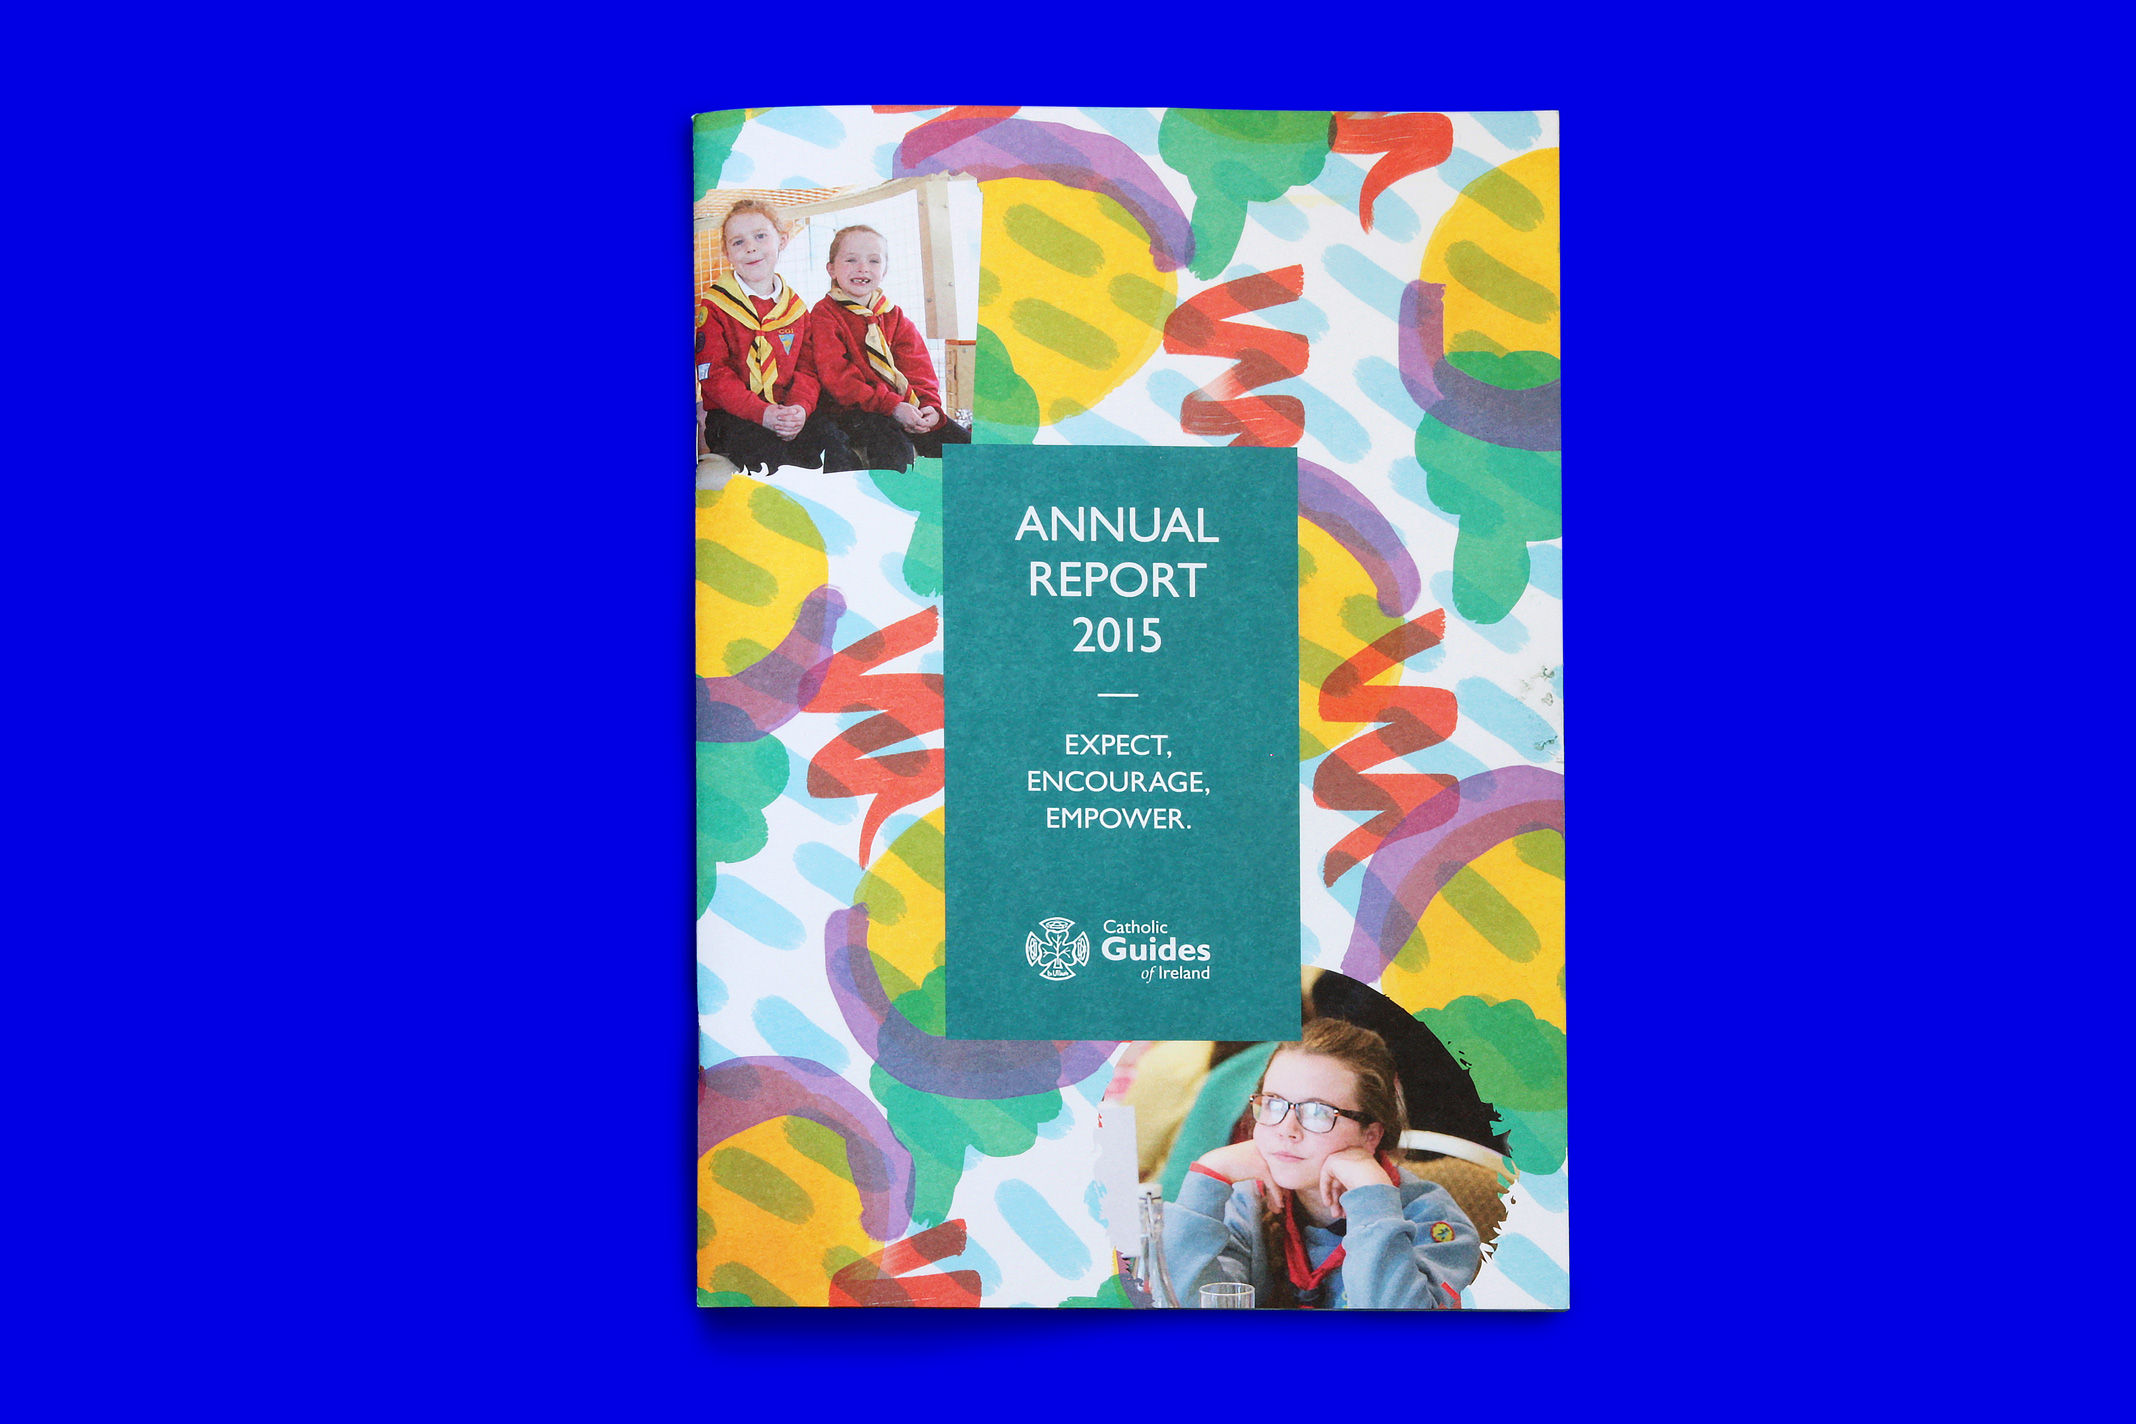 CGI-Annual-Report-2015-cover2.jpg